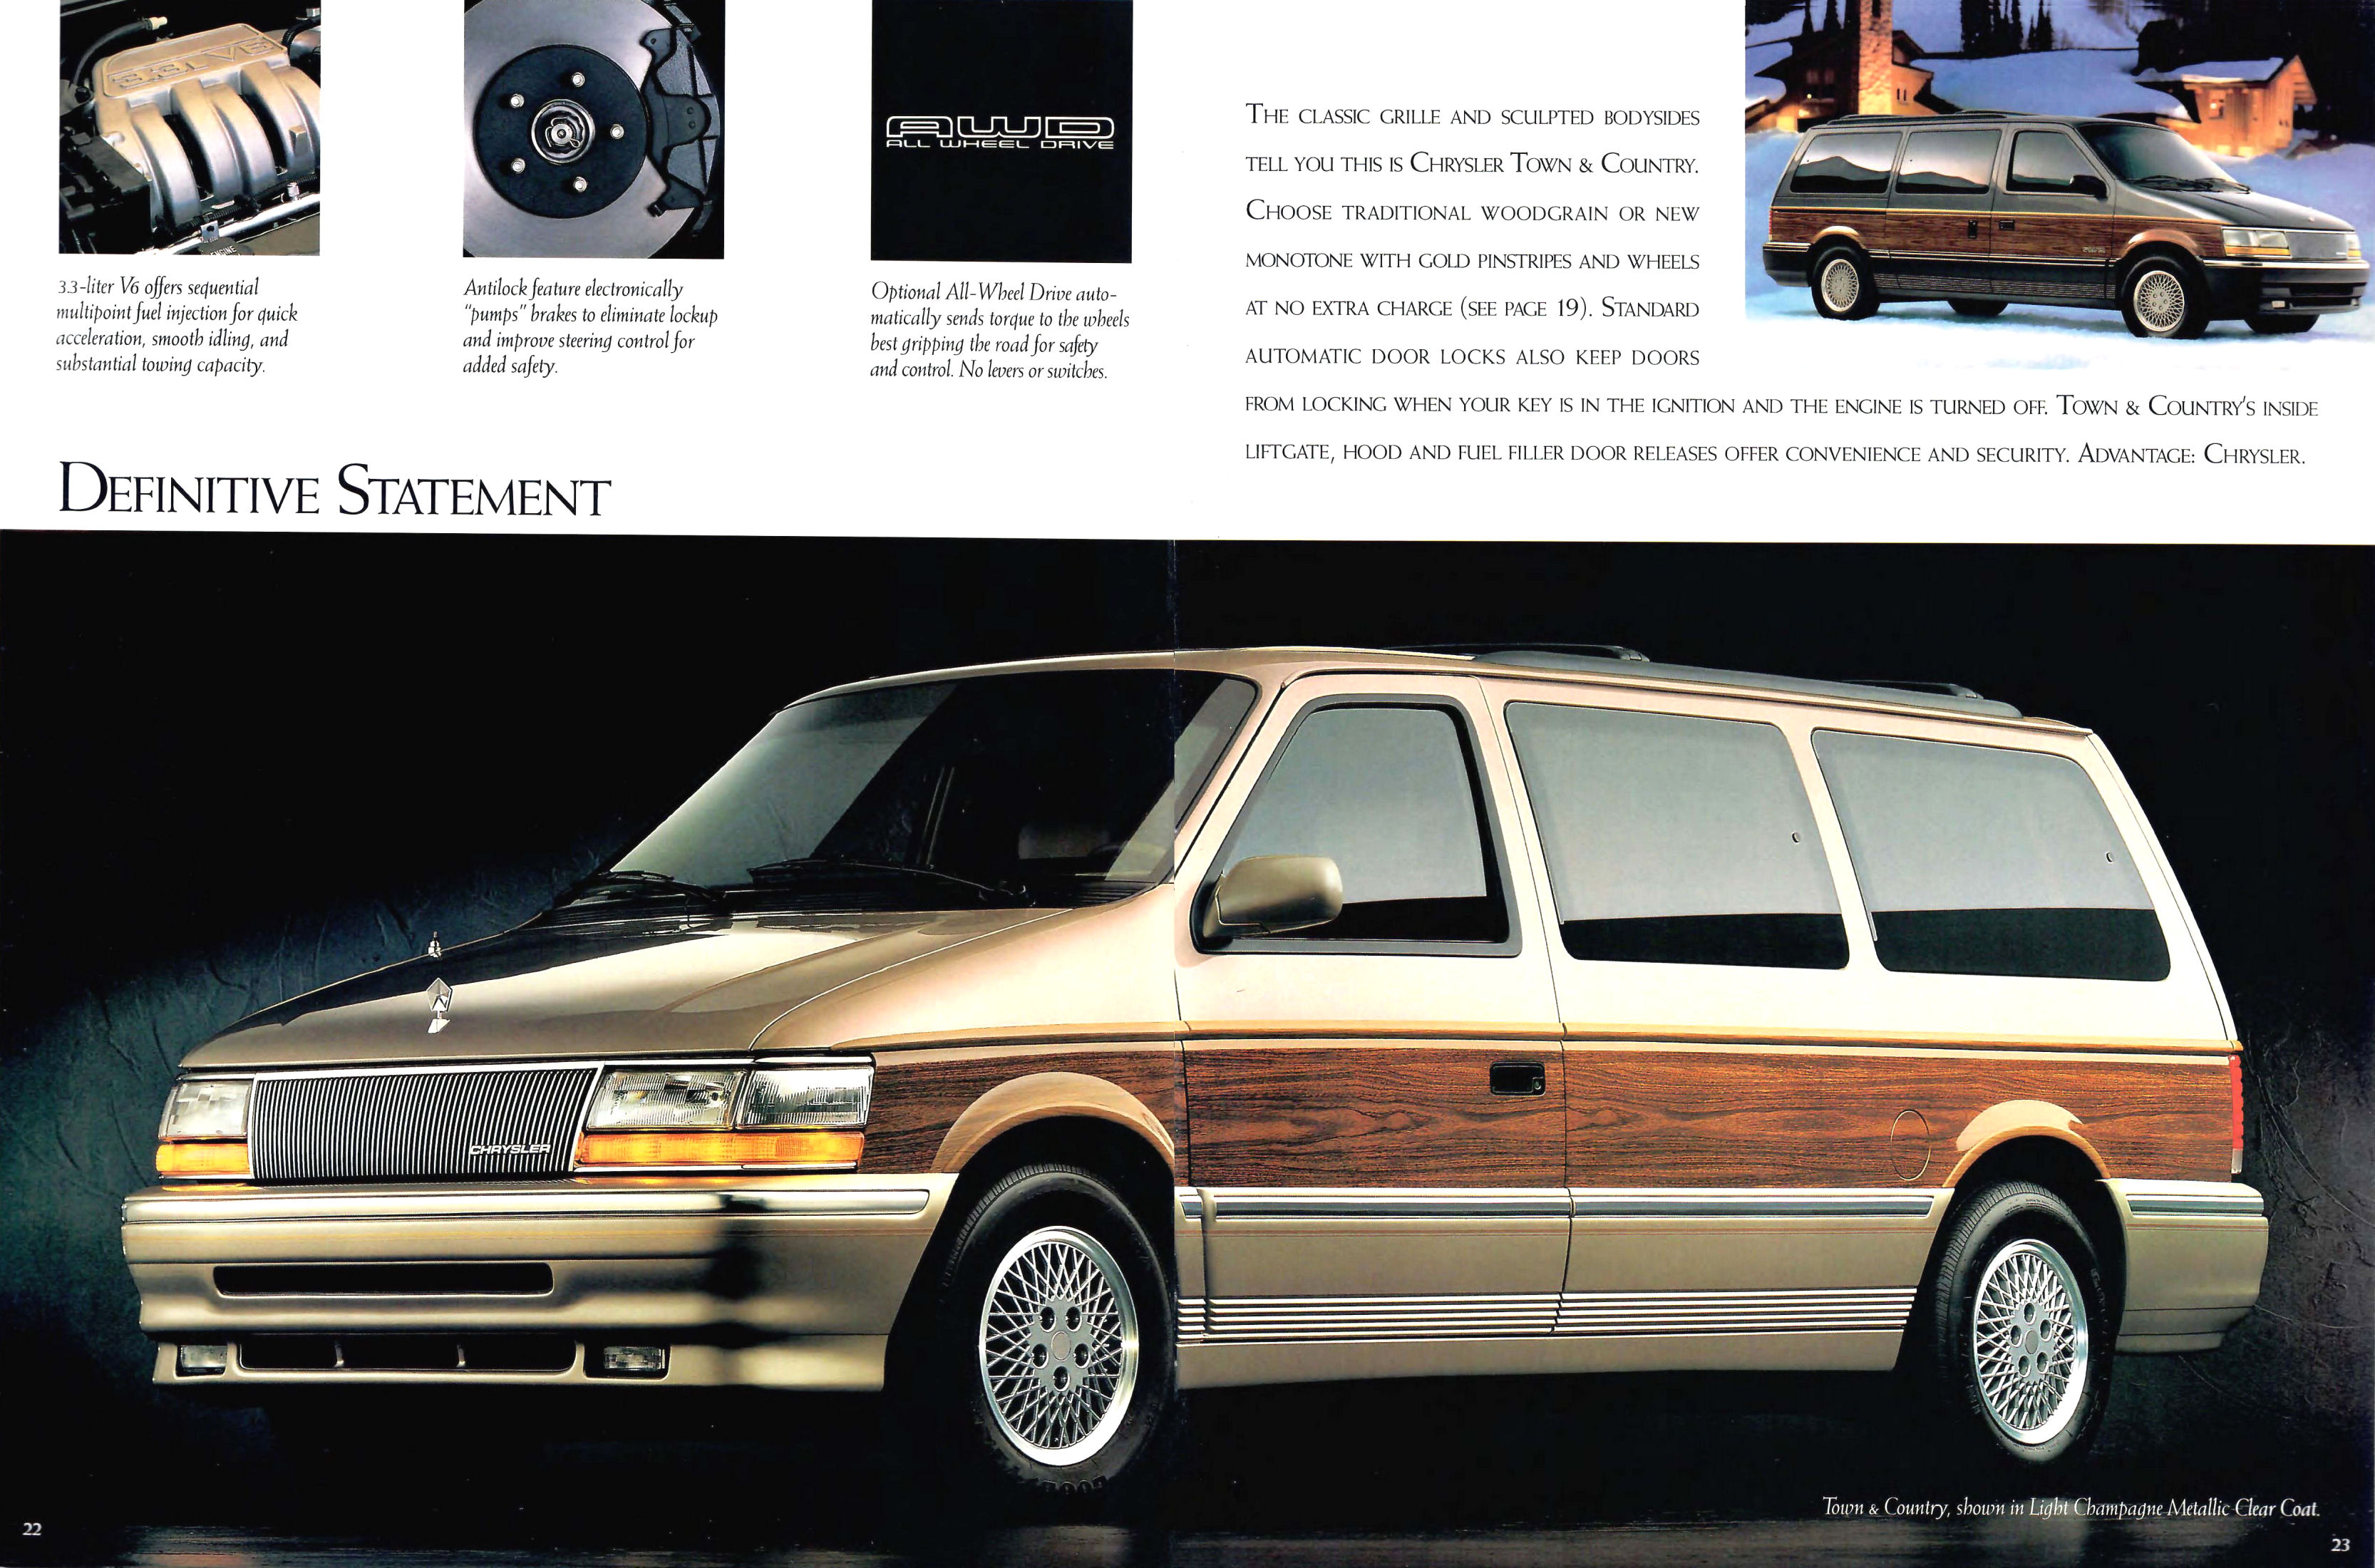 1992 Chrysler-Plymouth Minvans-22-23